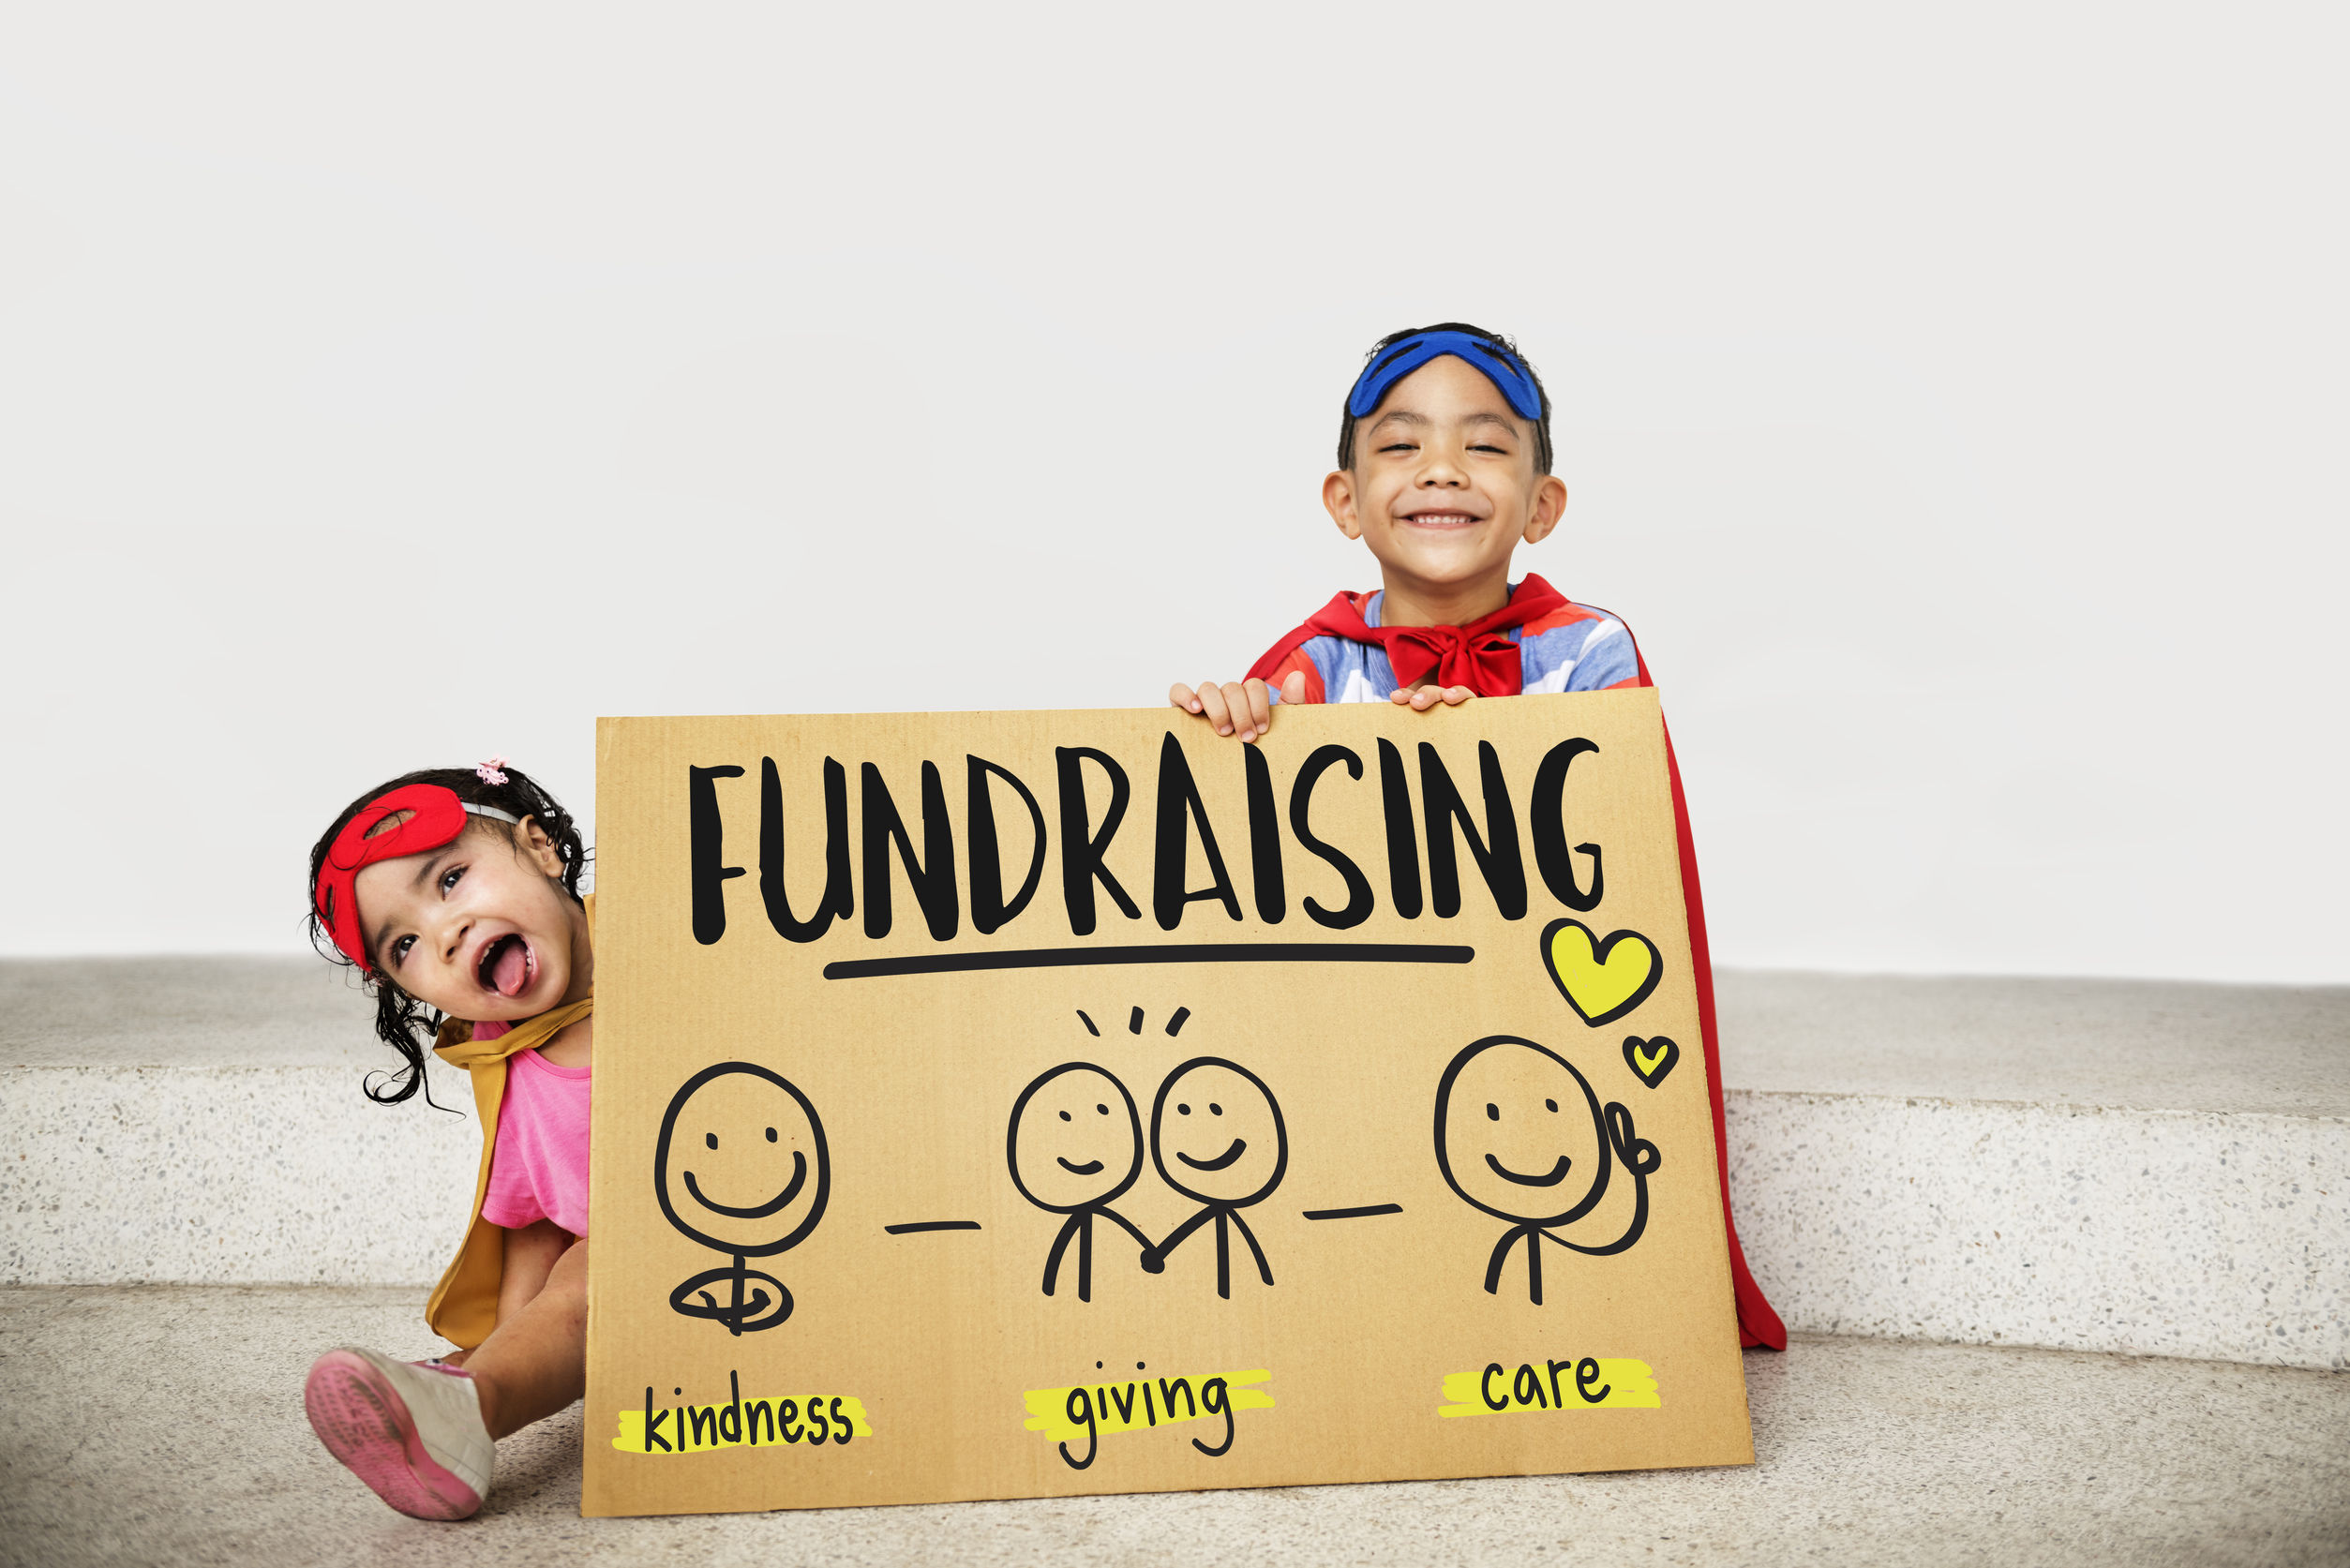 charity donations fundraising nonprofit volunteer concept